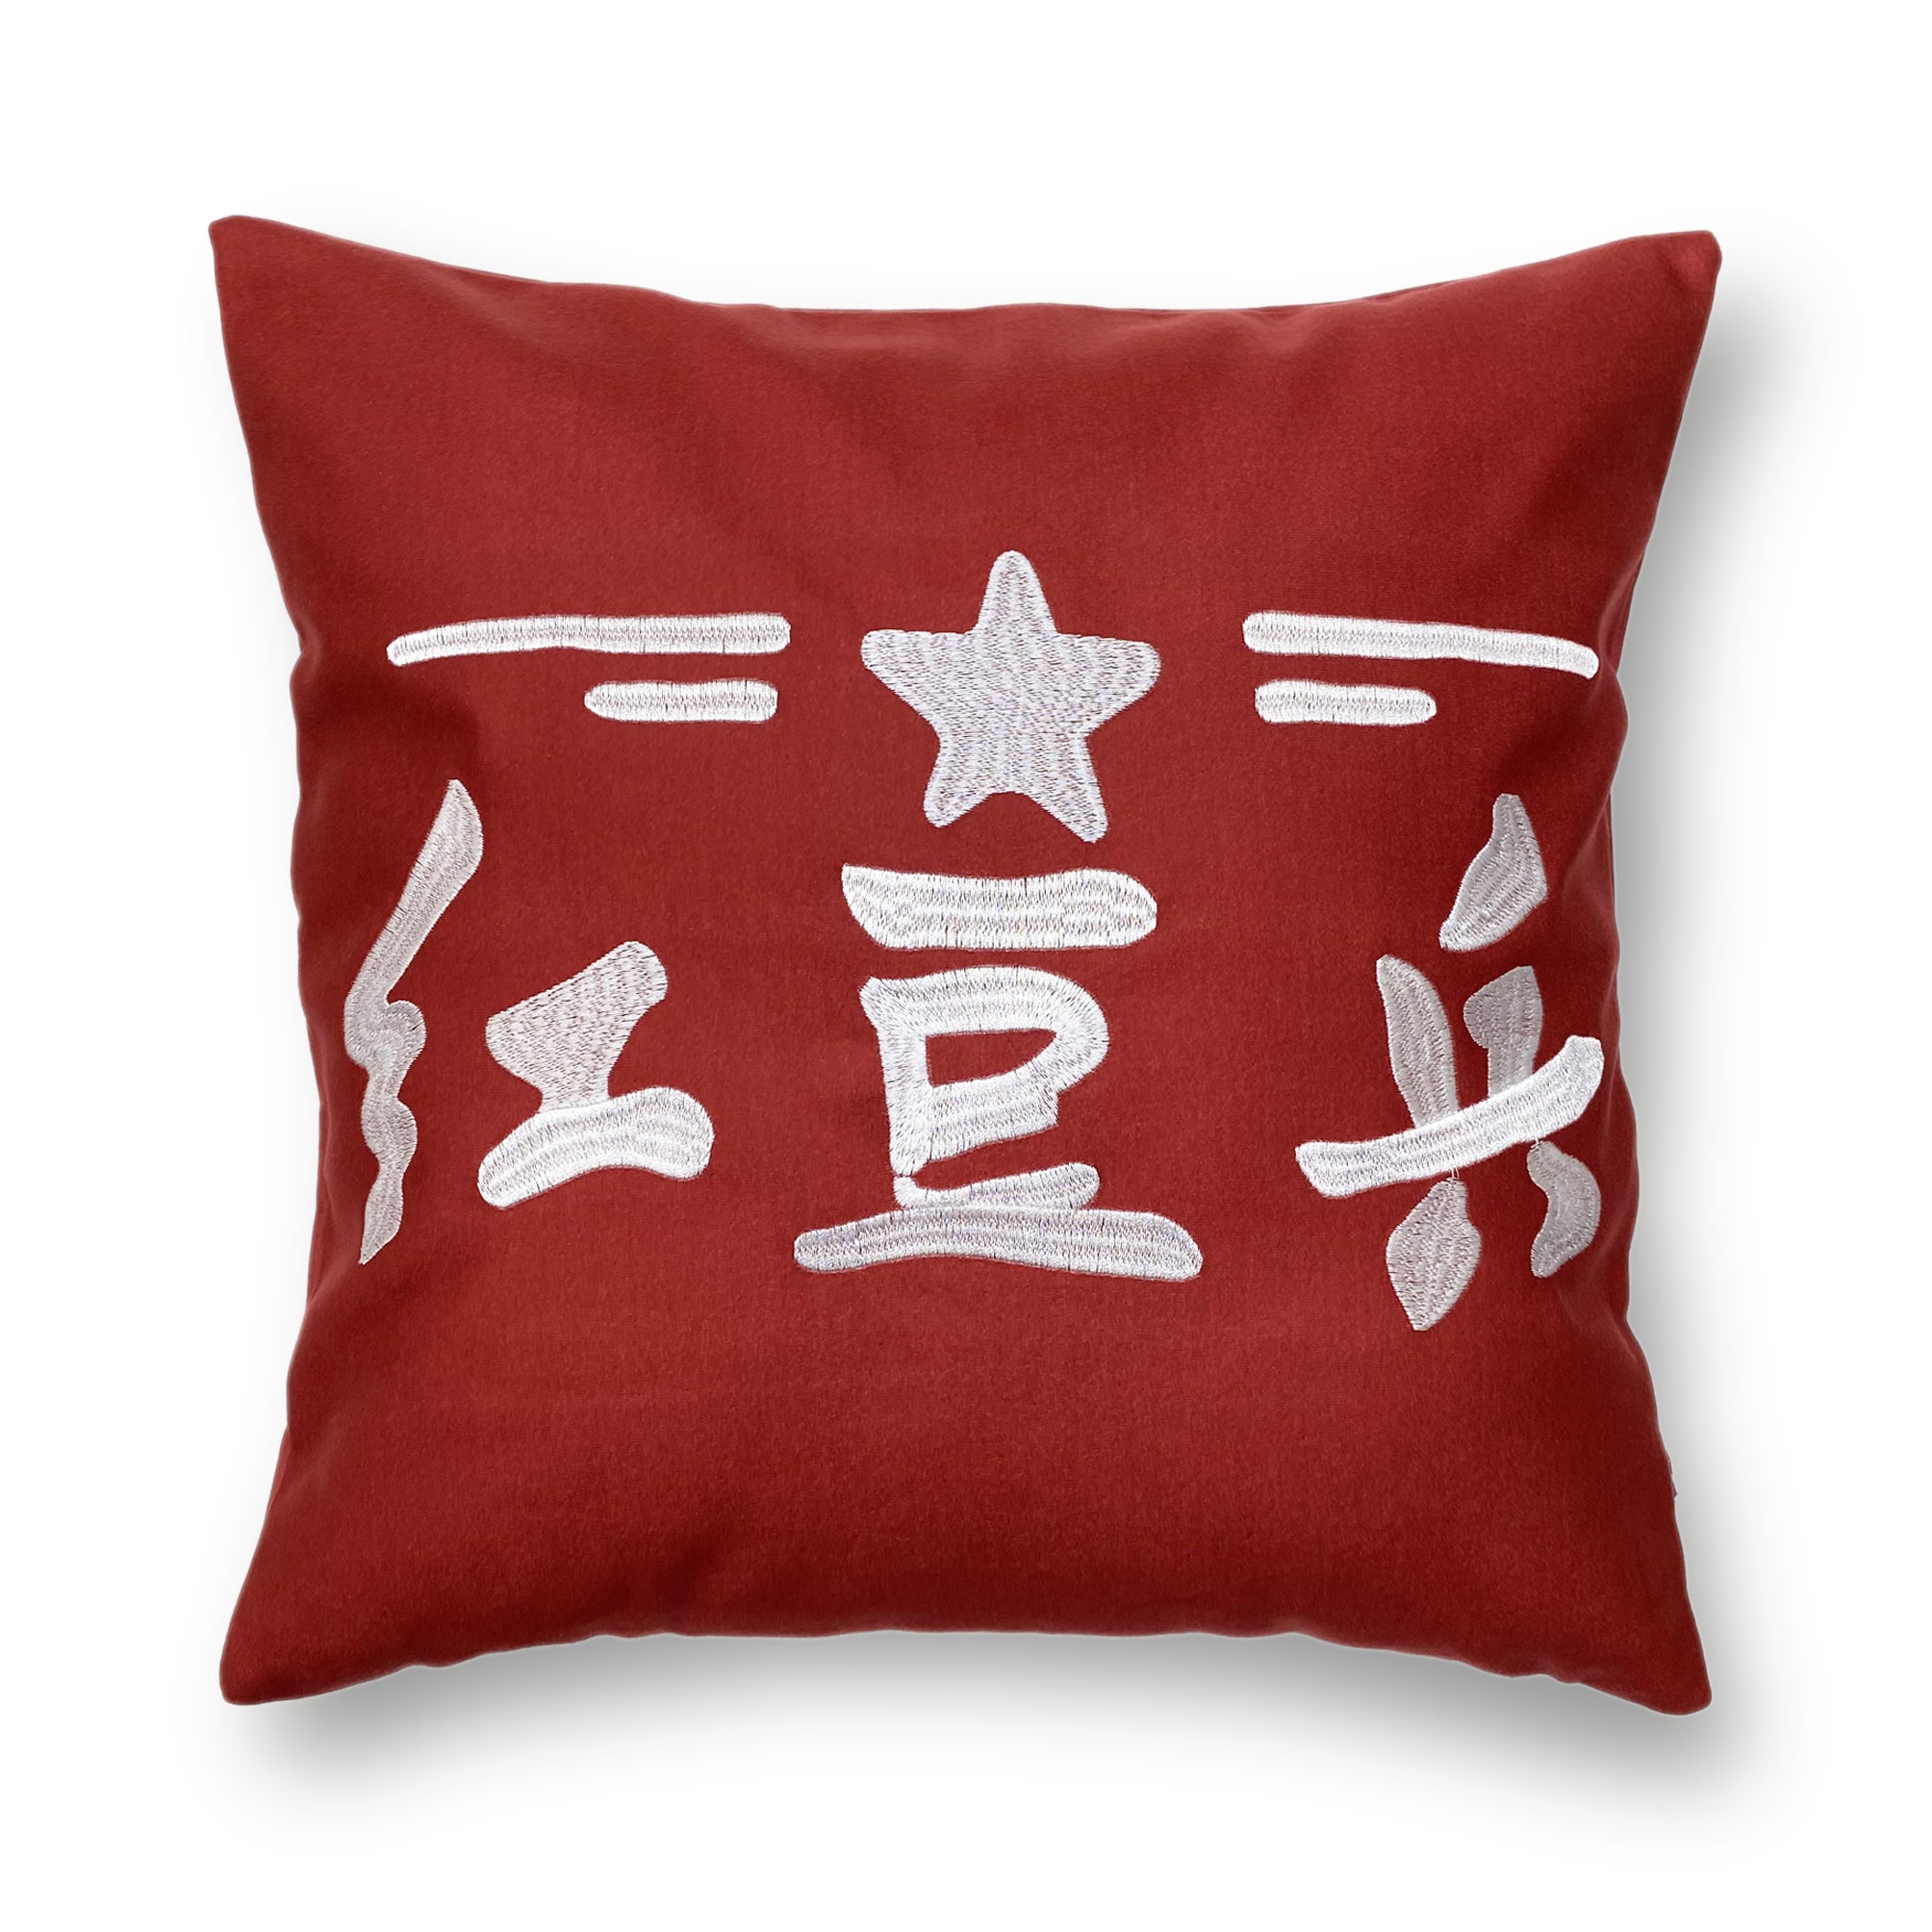 Red Bean Soldier Cushion Cover, 45 x 45 cm